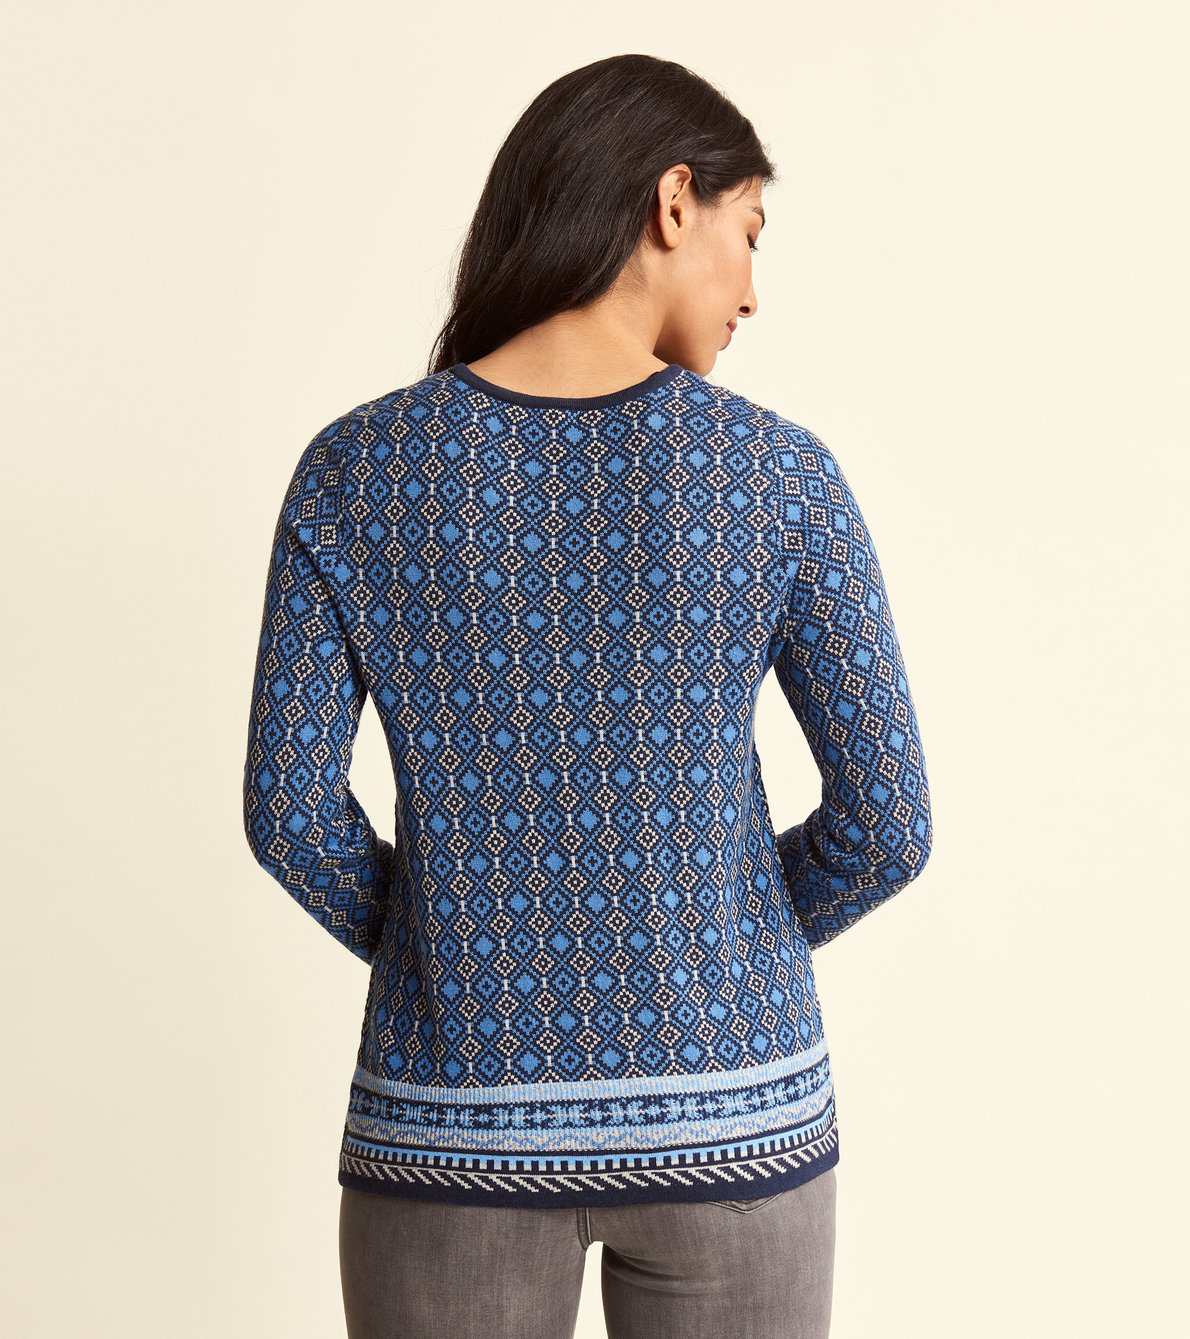 View larger image of Ayla Sweater - Dutch Blue Argyle